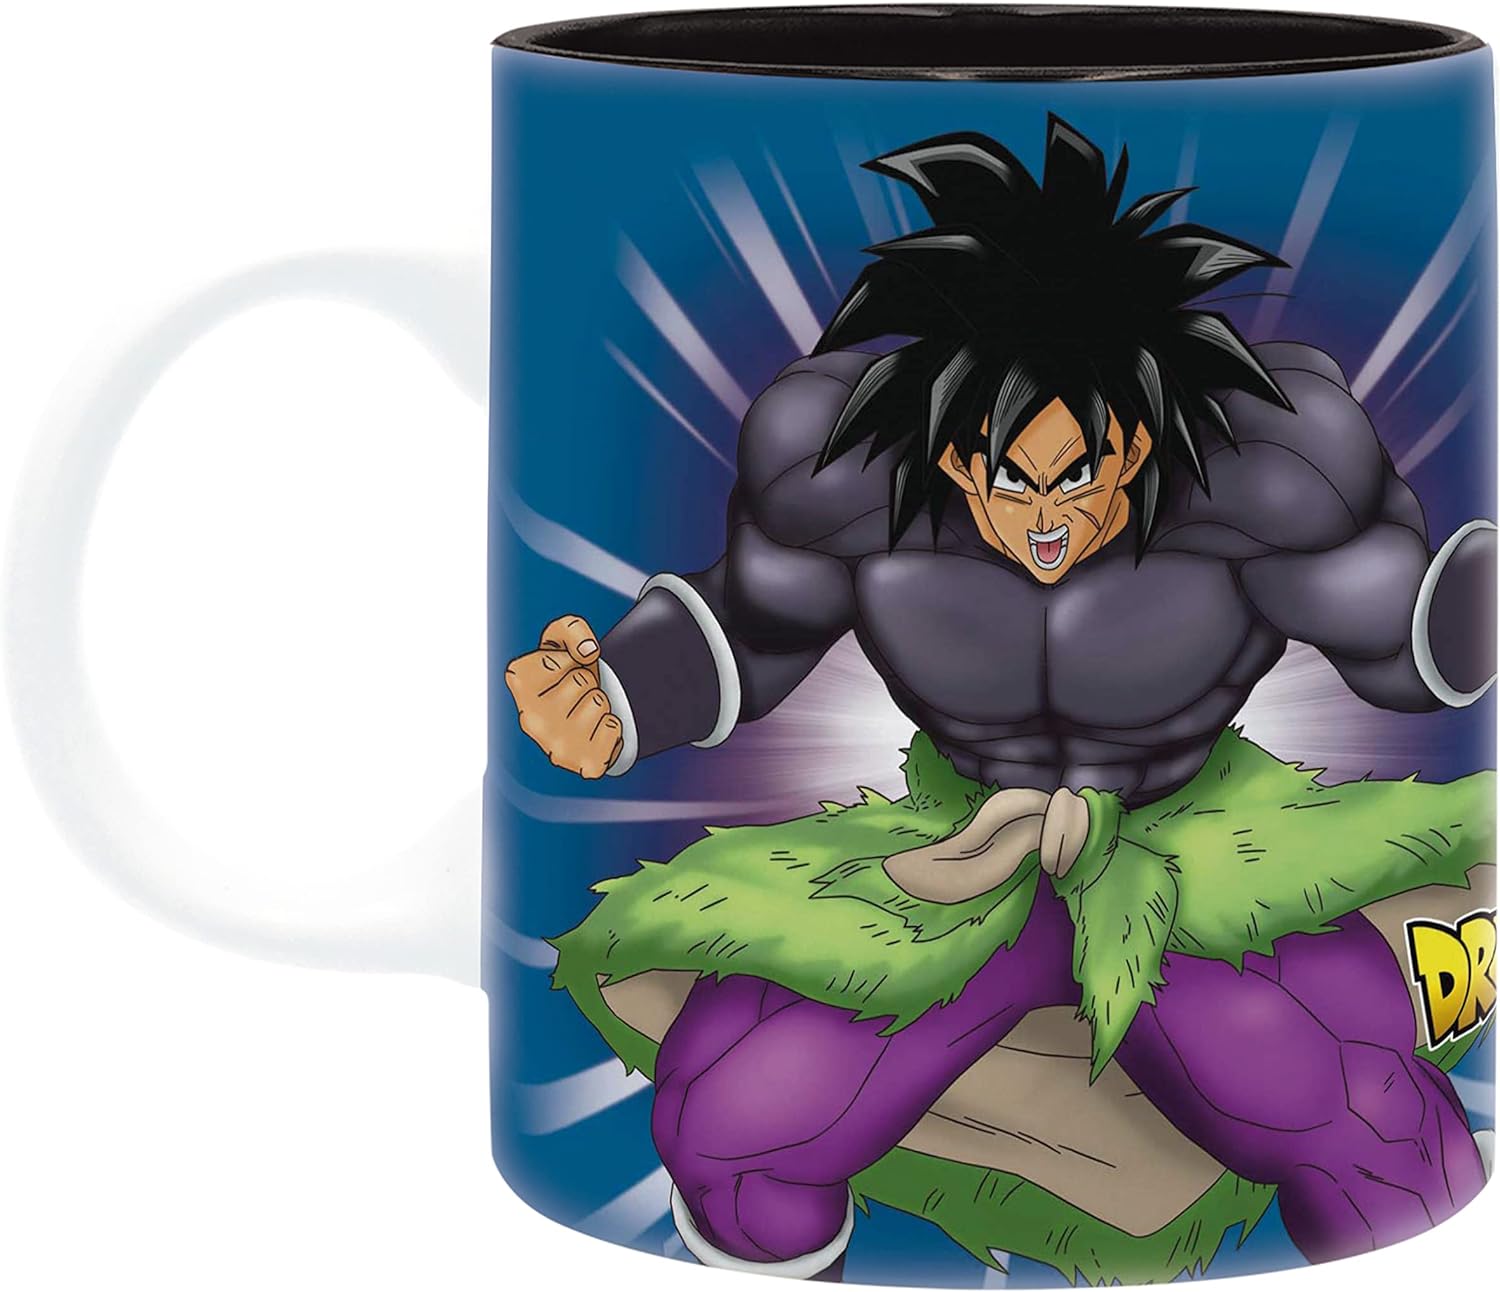 ABYstyle - Dragon Ball Super: Super Hero Mug 320 ml Goku, Vegeta, Broly